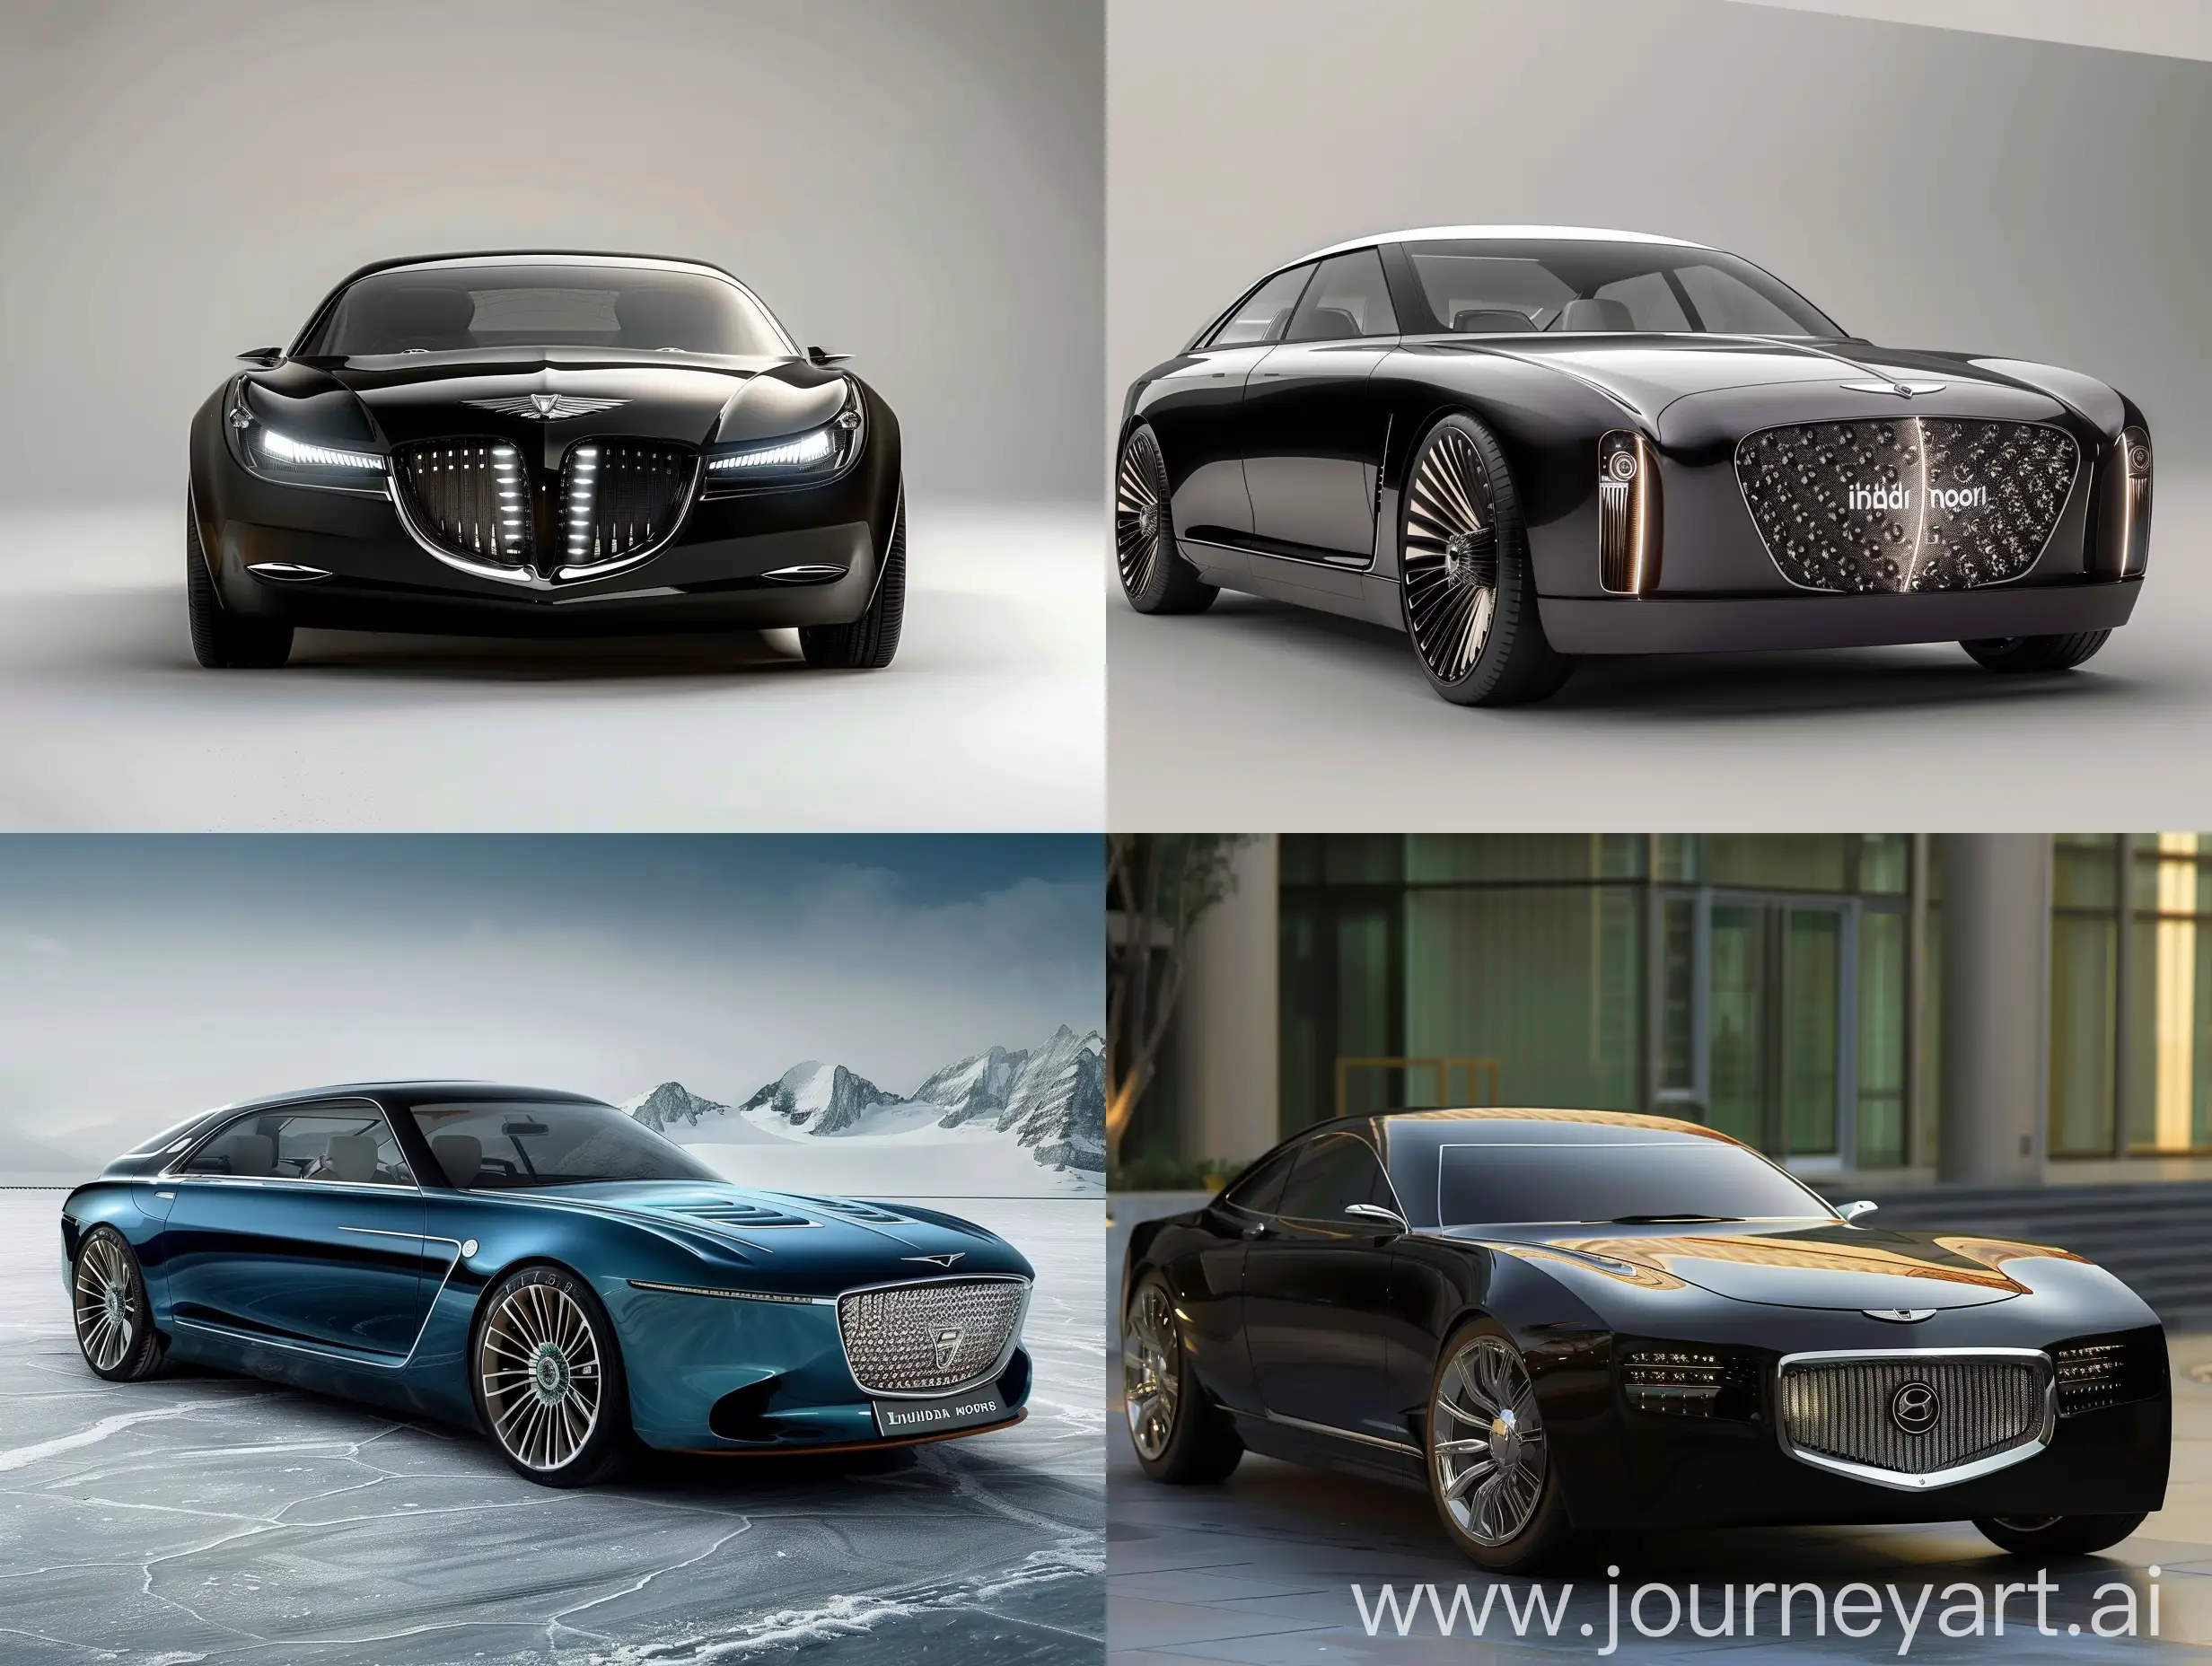 Futuristic-Redesigned-Hindustan-Motors-Ambassador-Sedan-Car-with-Luxury-and-Elegance-Front-View